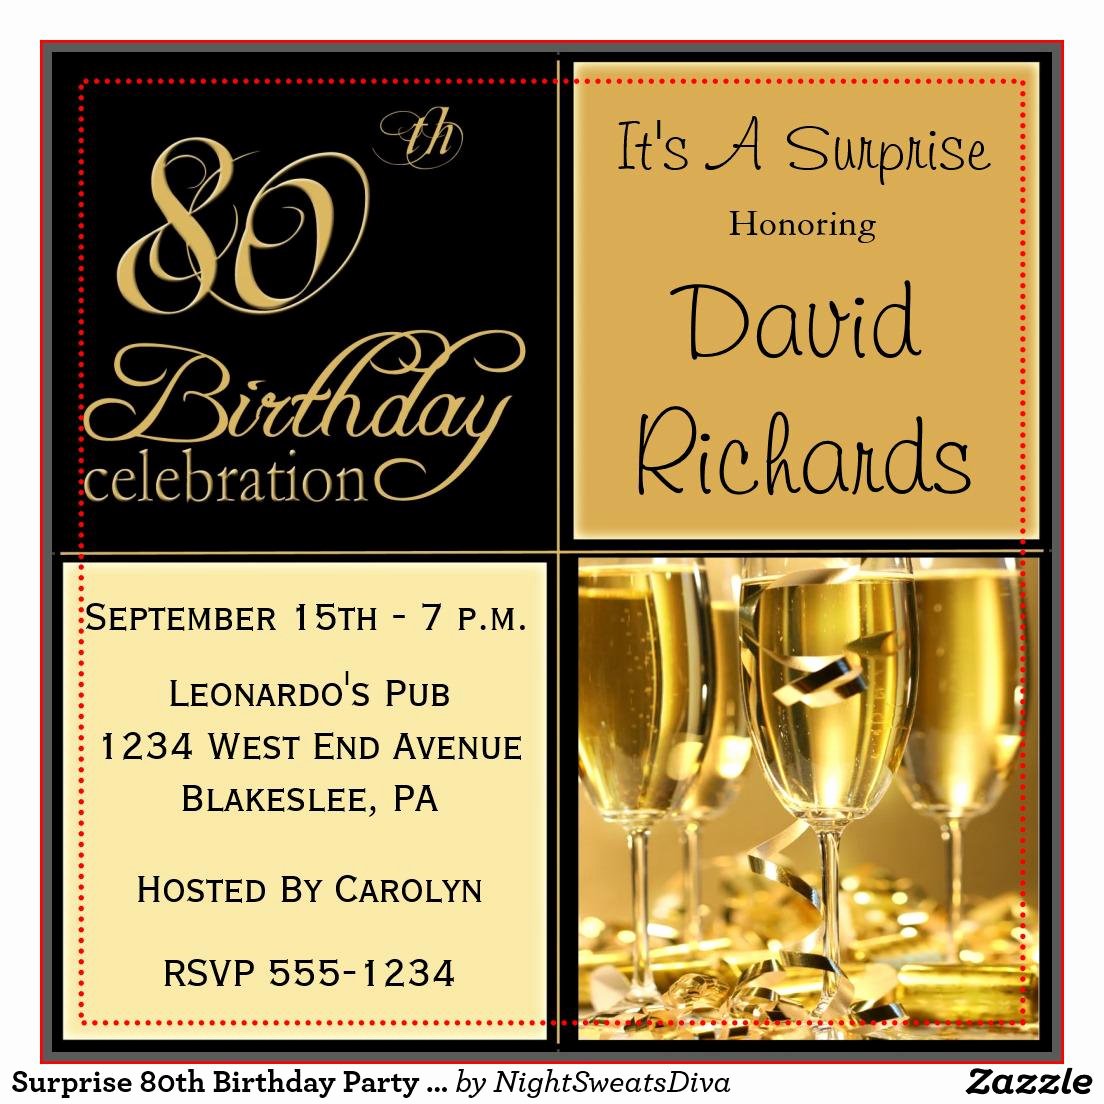 15 Sample 80th Birthday Invitations Templates Ideas